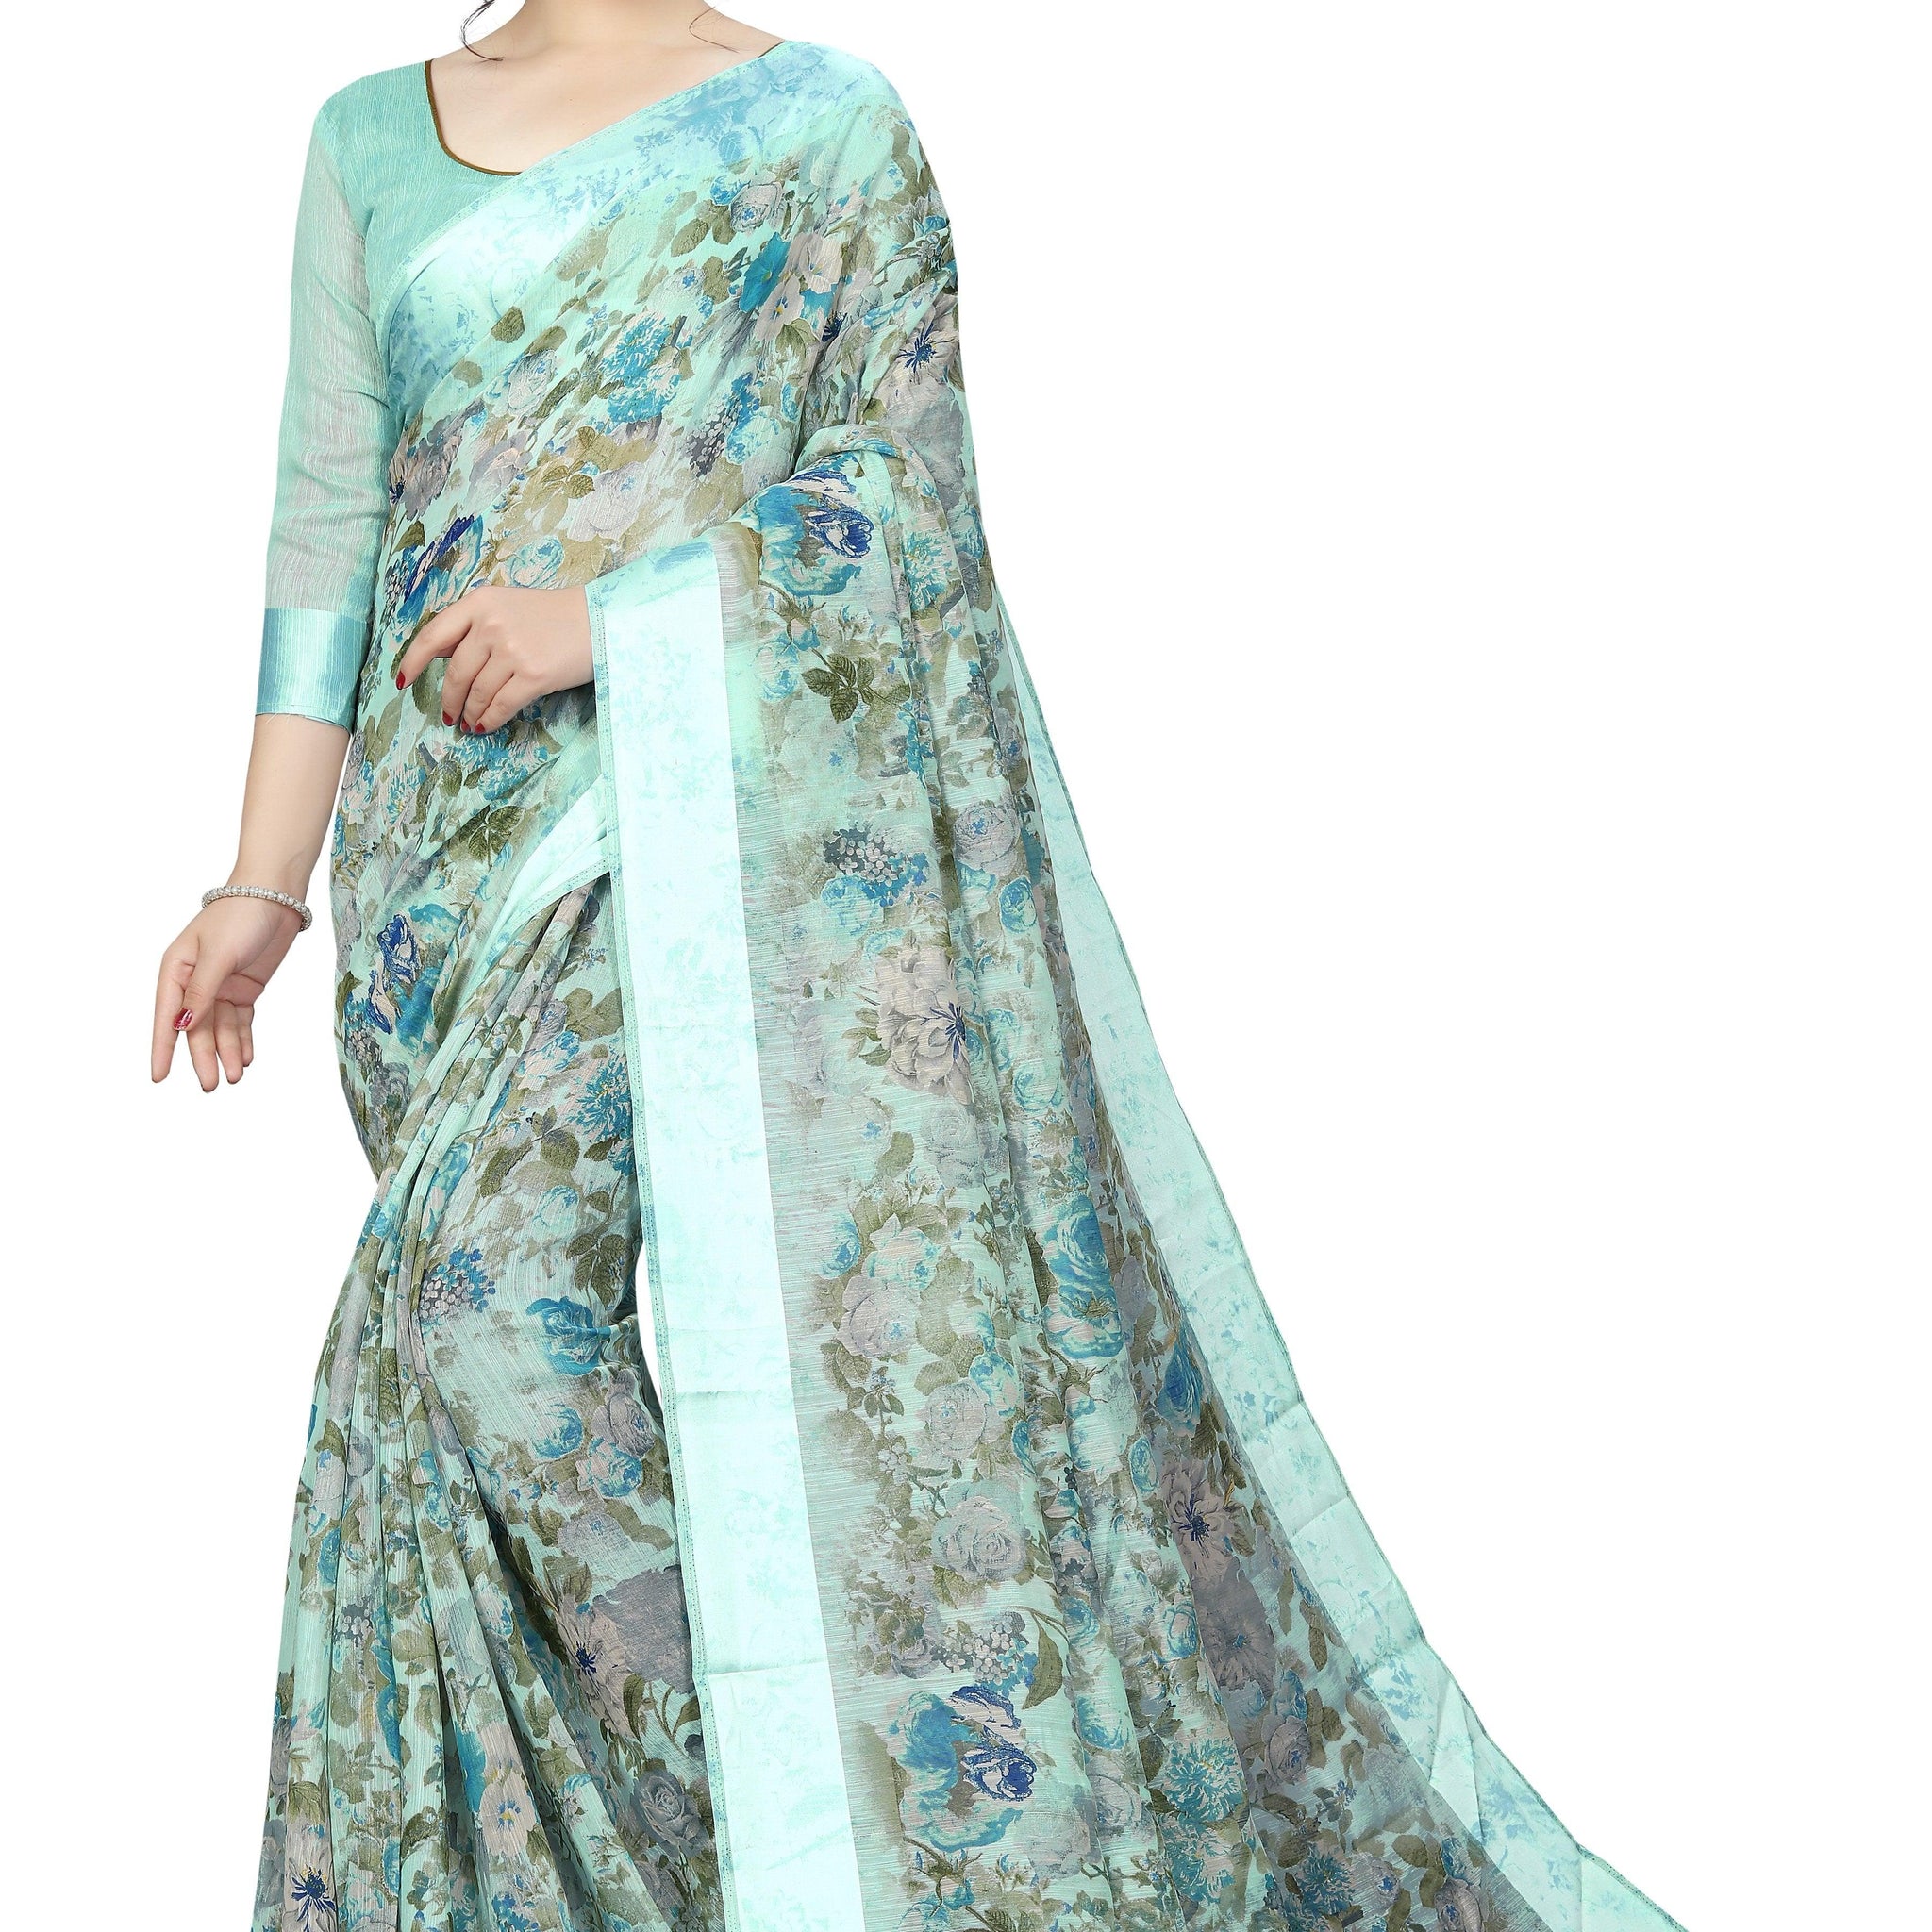 Elegant mint Pure  Linen Designer Saree